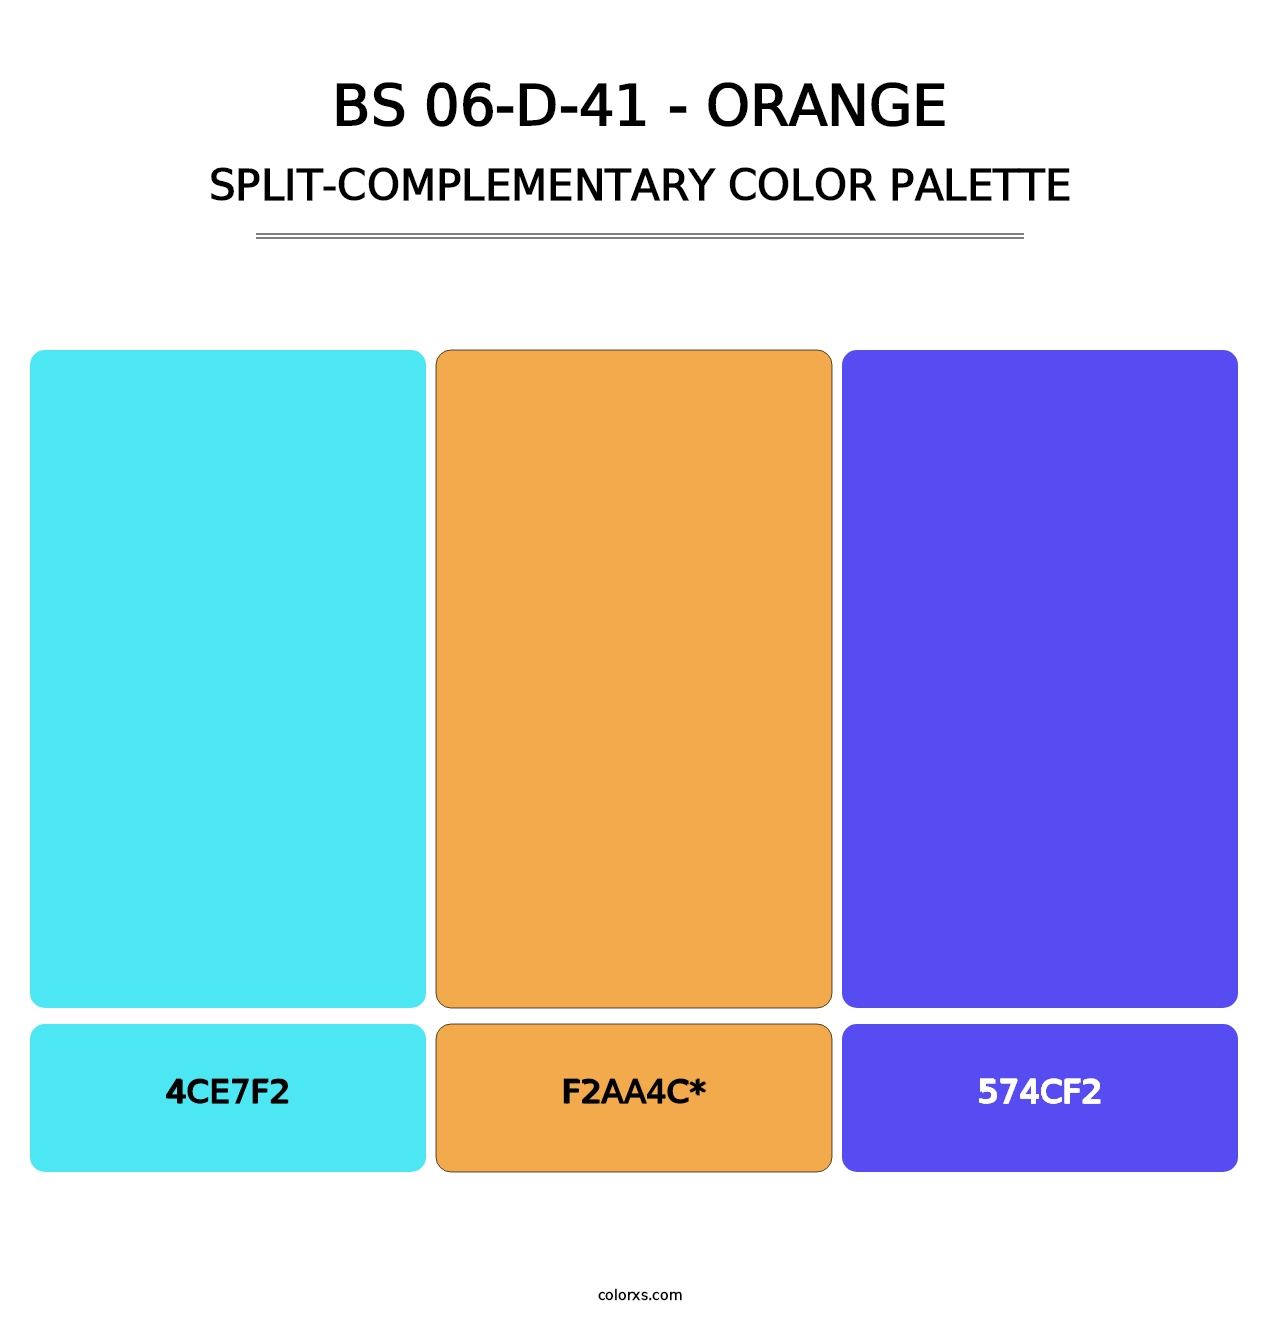 BS 06-D-41 - Orange - Split-Complementary Color Palette